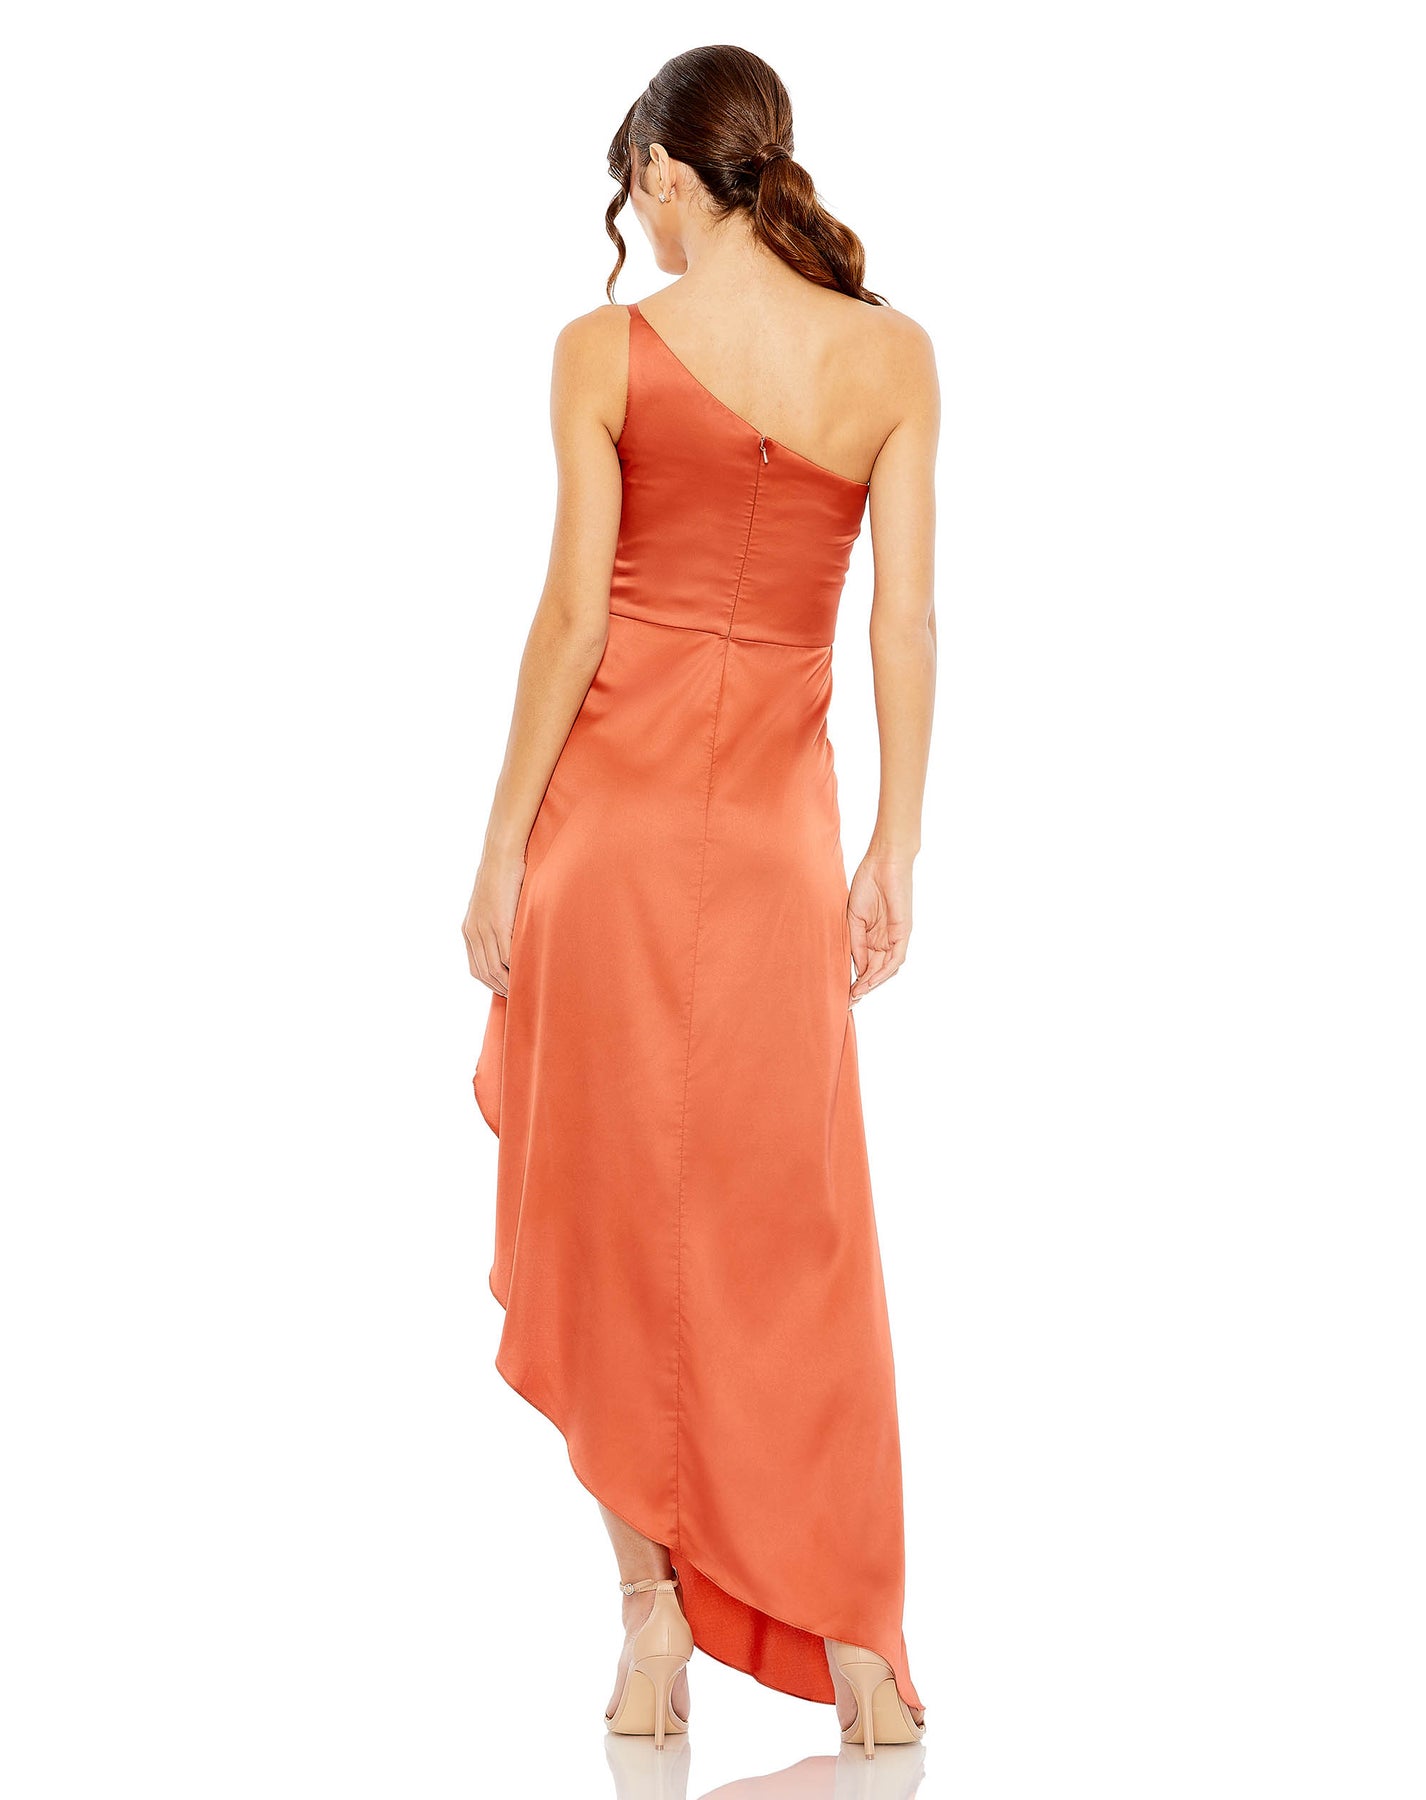 One Shoulder Hi-Low Draped Charmeuse Dress | Sample | Sz. 2 – Mac Duggal